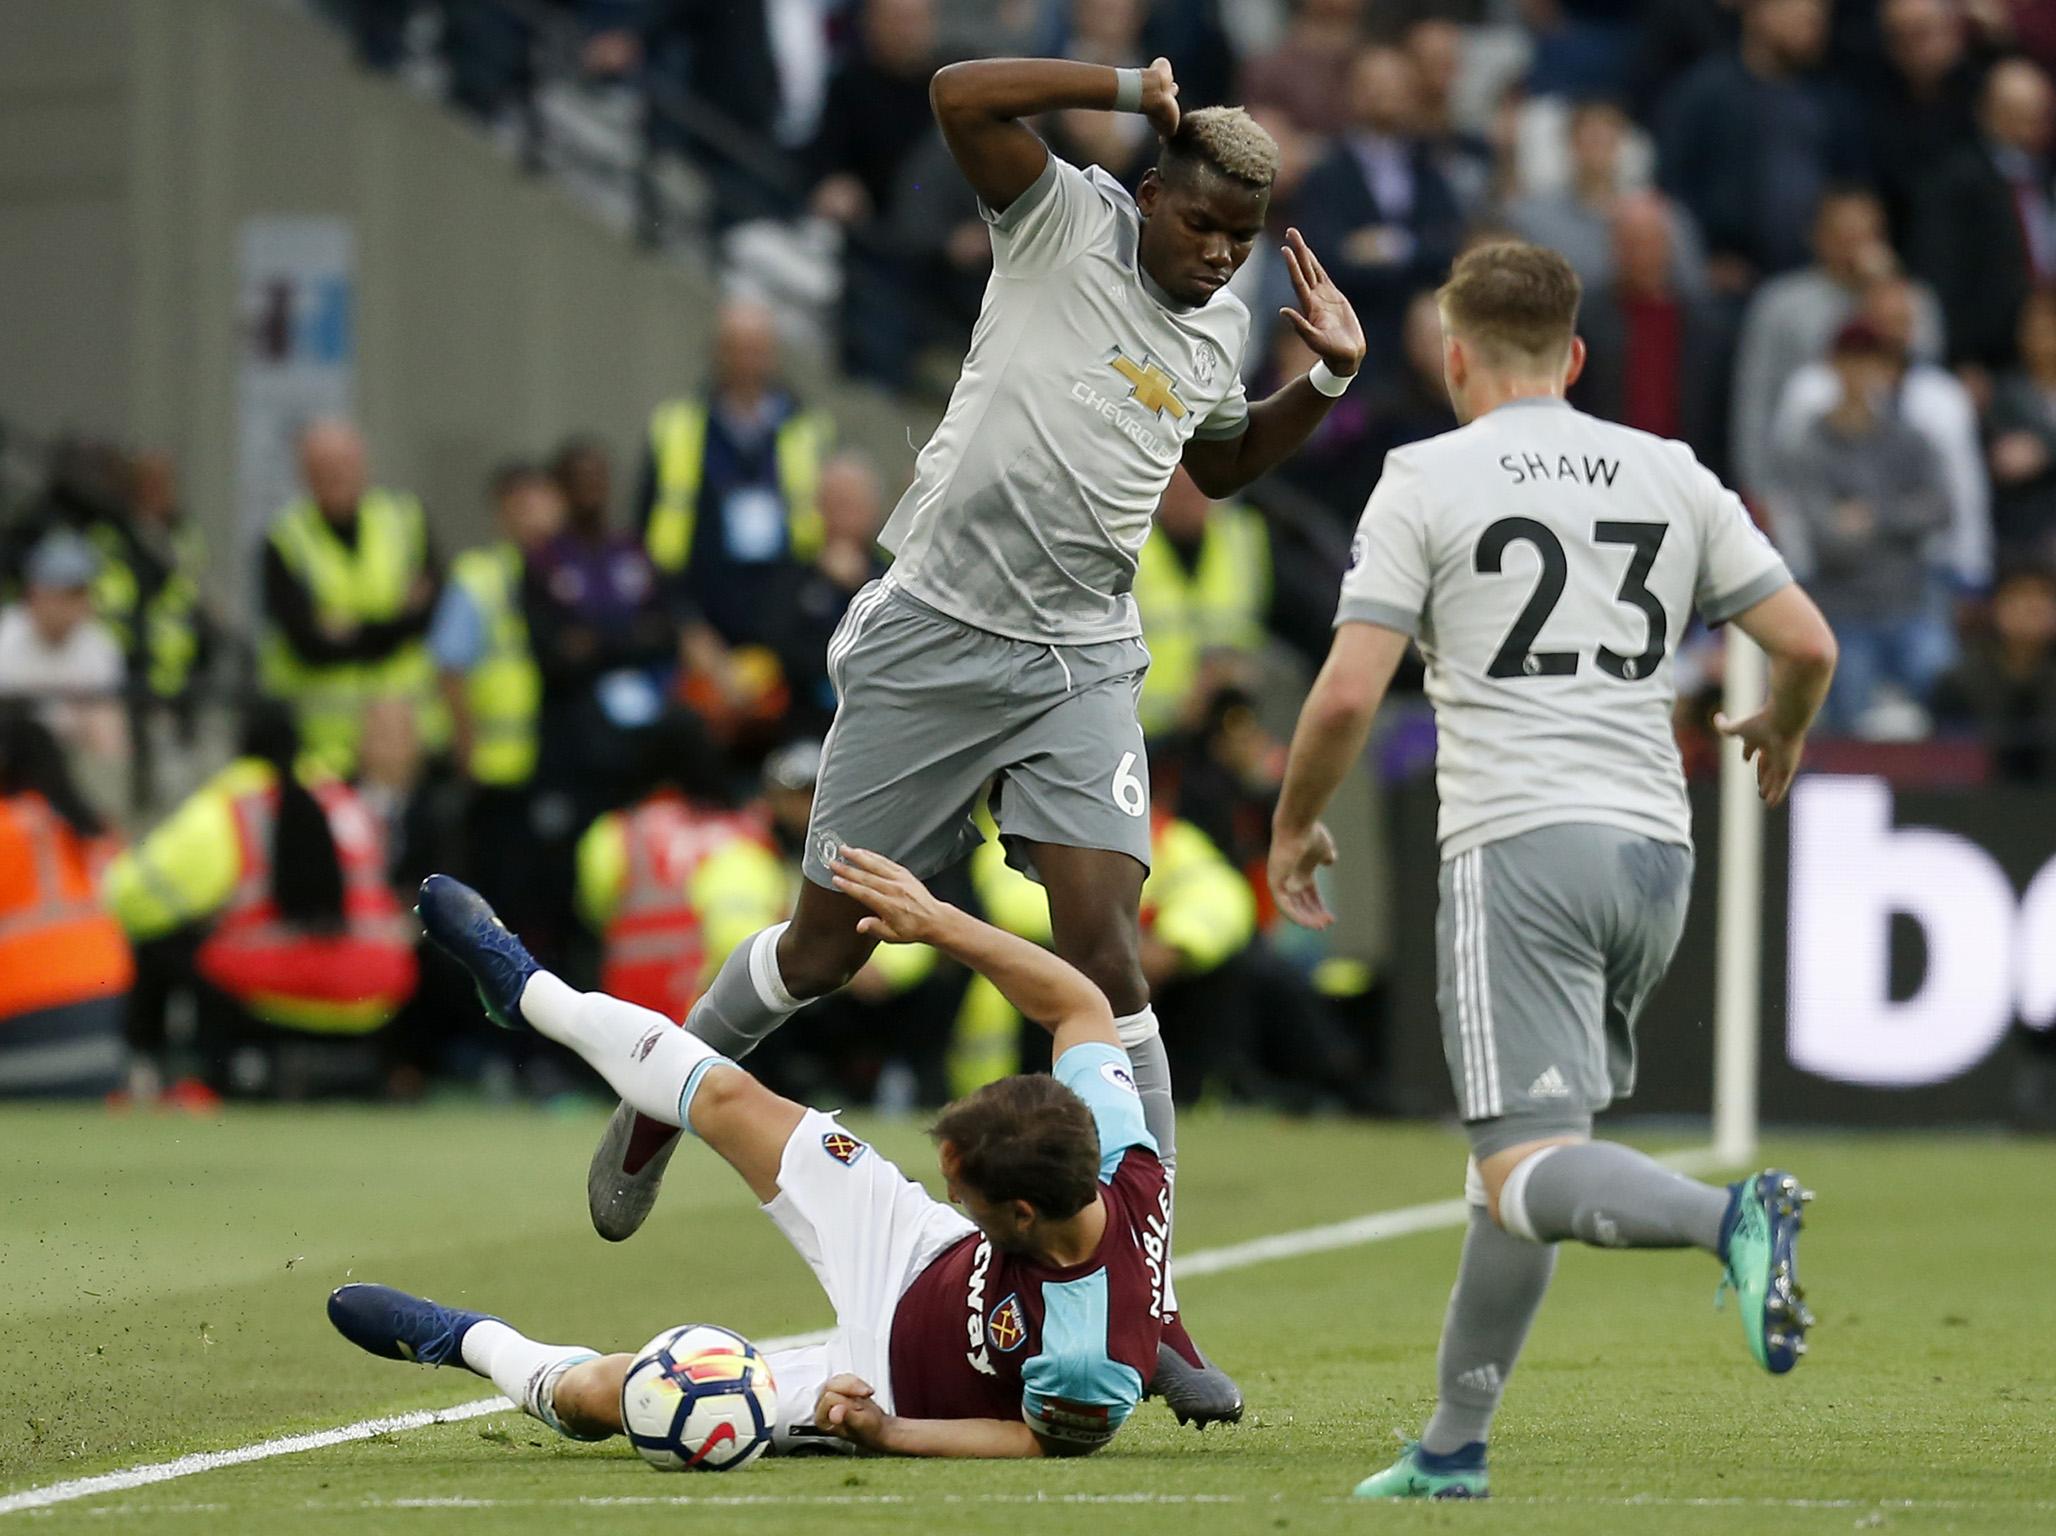 West Ham United’s Mark Noble challenges Paul Pogba